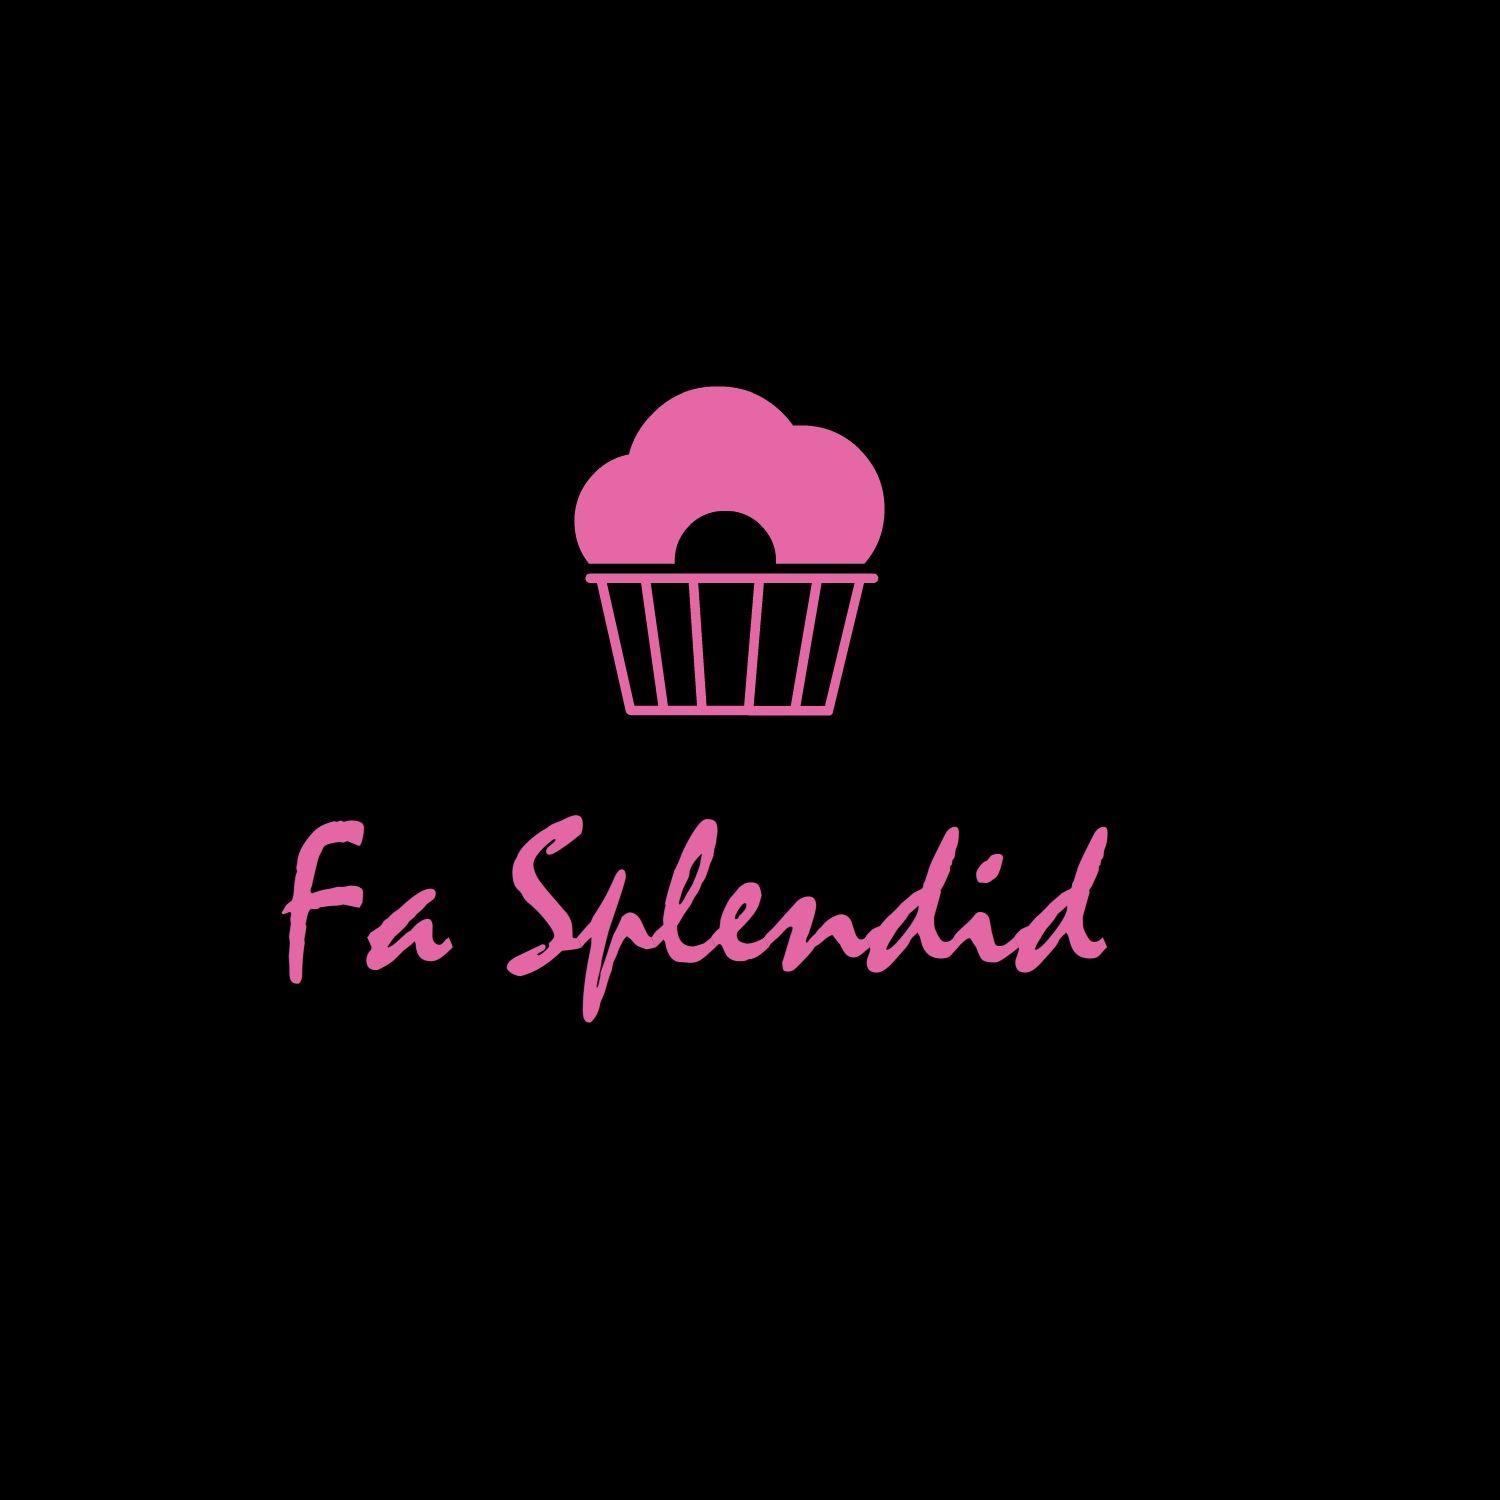 Splendid Logo - Elegant, Feminine Logo Design for Fa Splendid or Fa by Ameeee ...